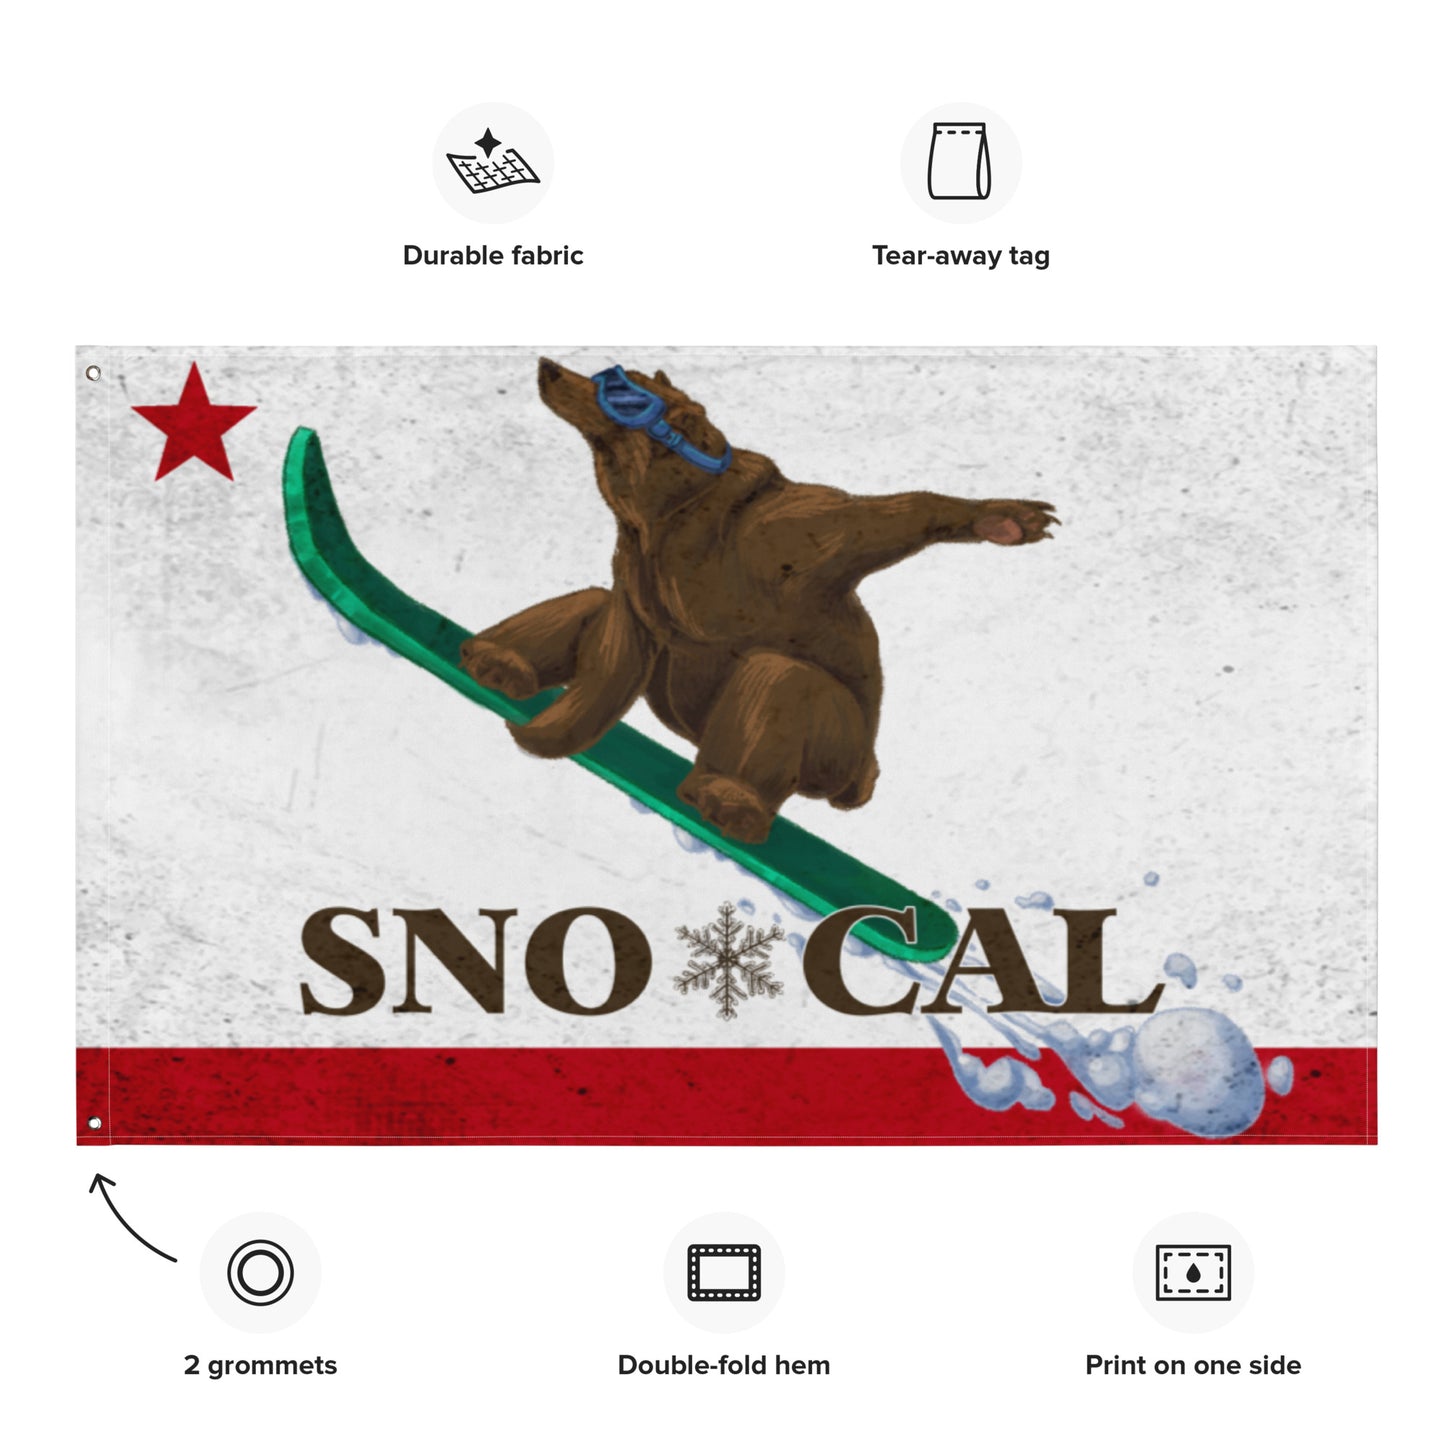 Sno*Cal Flag (Goldie Sending It)